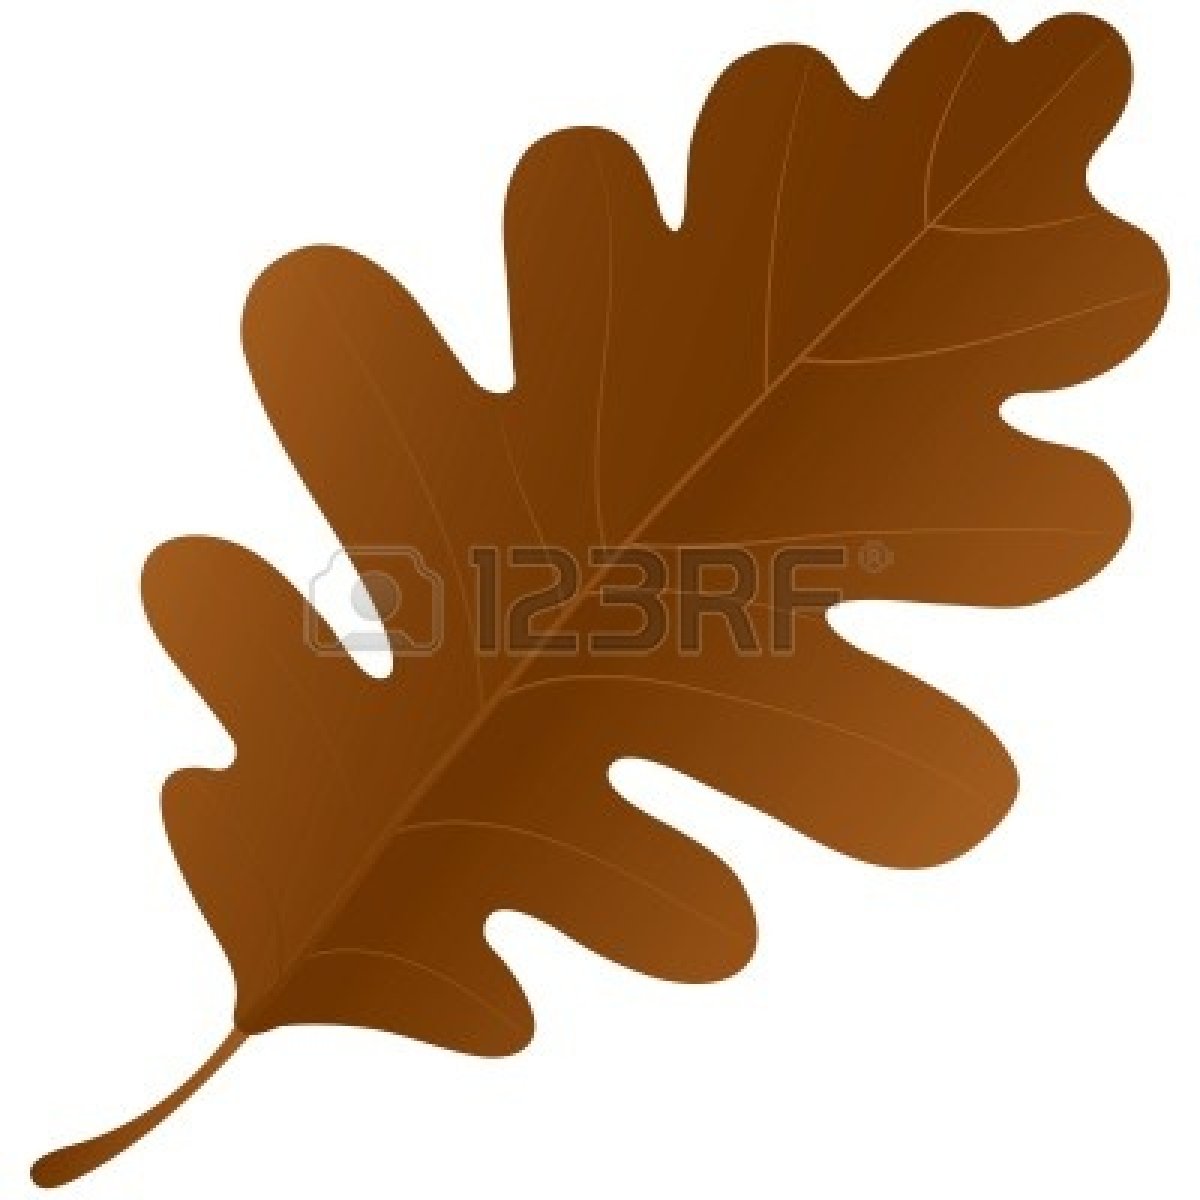 acorn clipart oak leaf